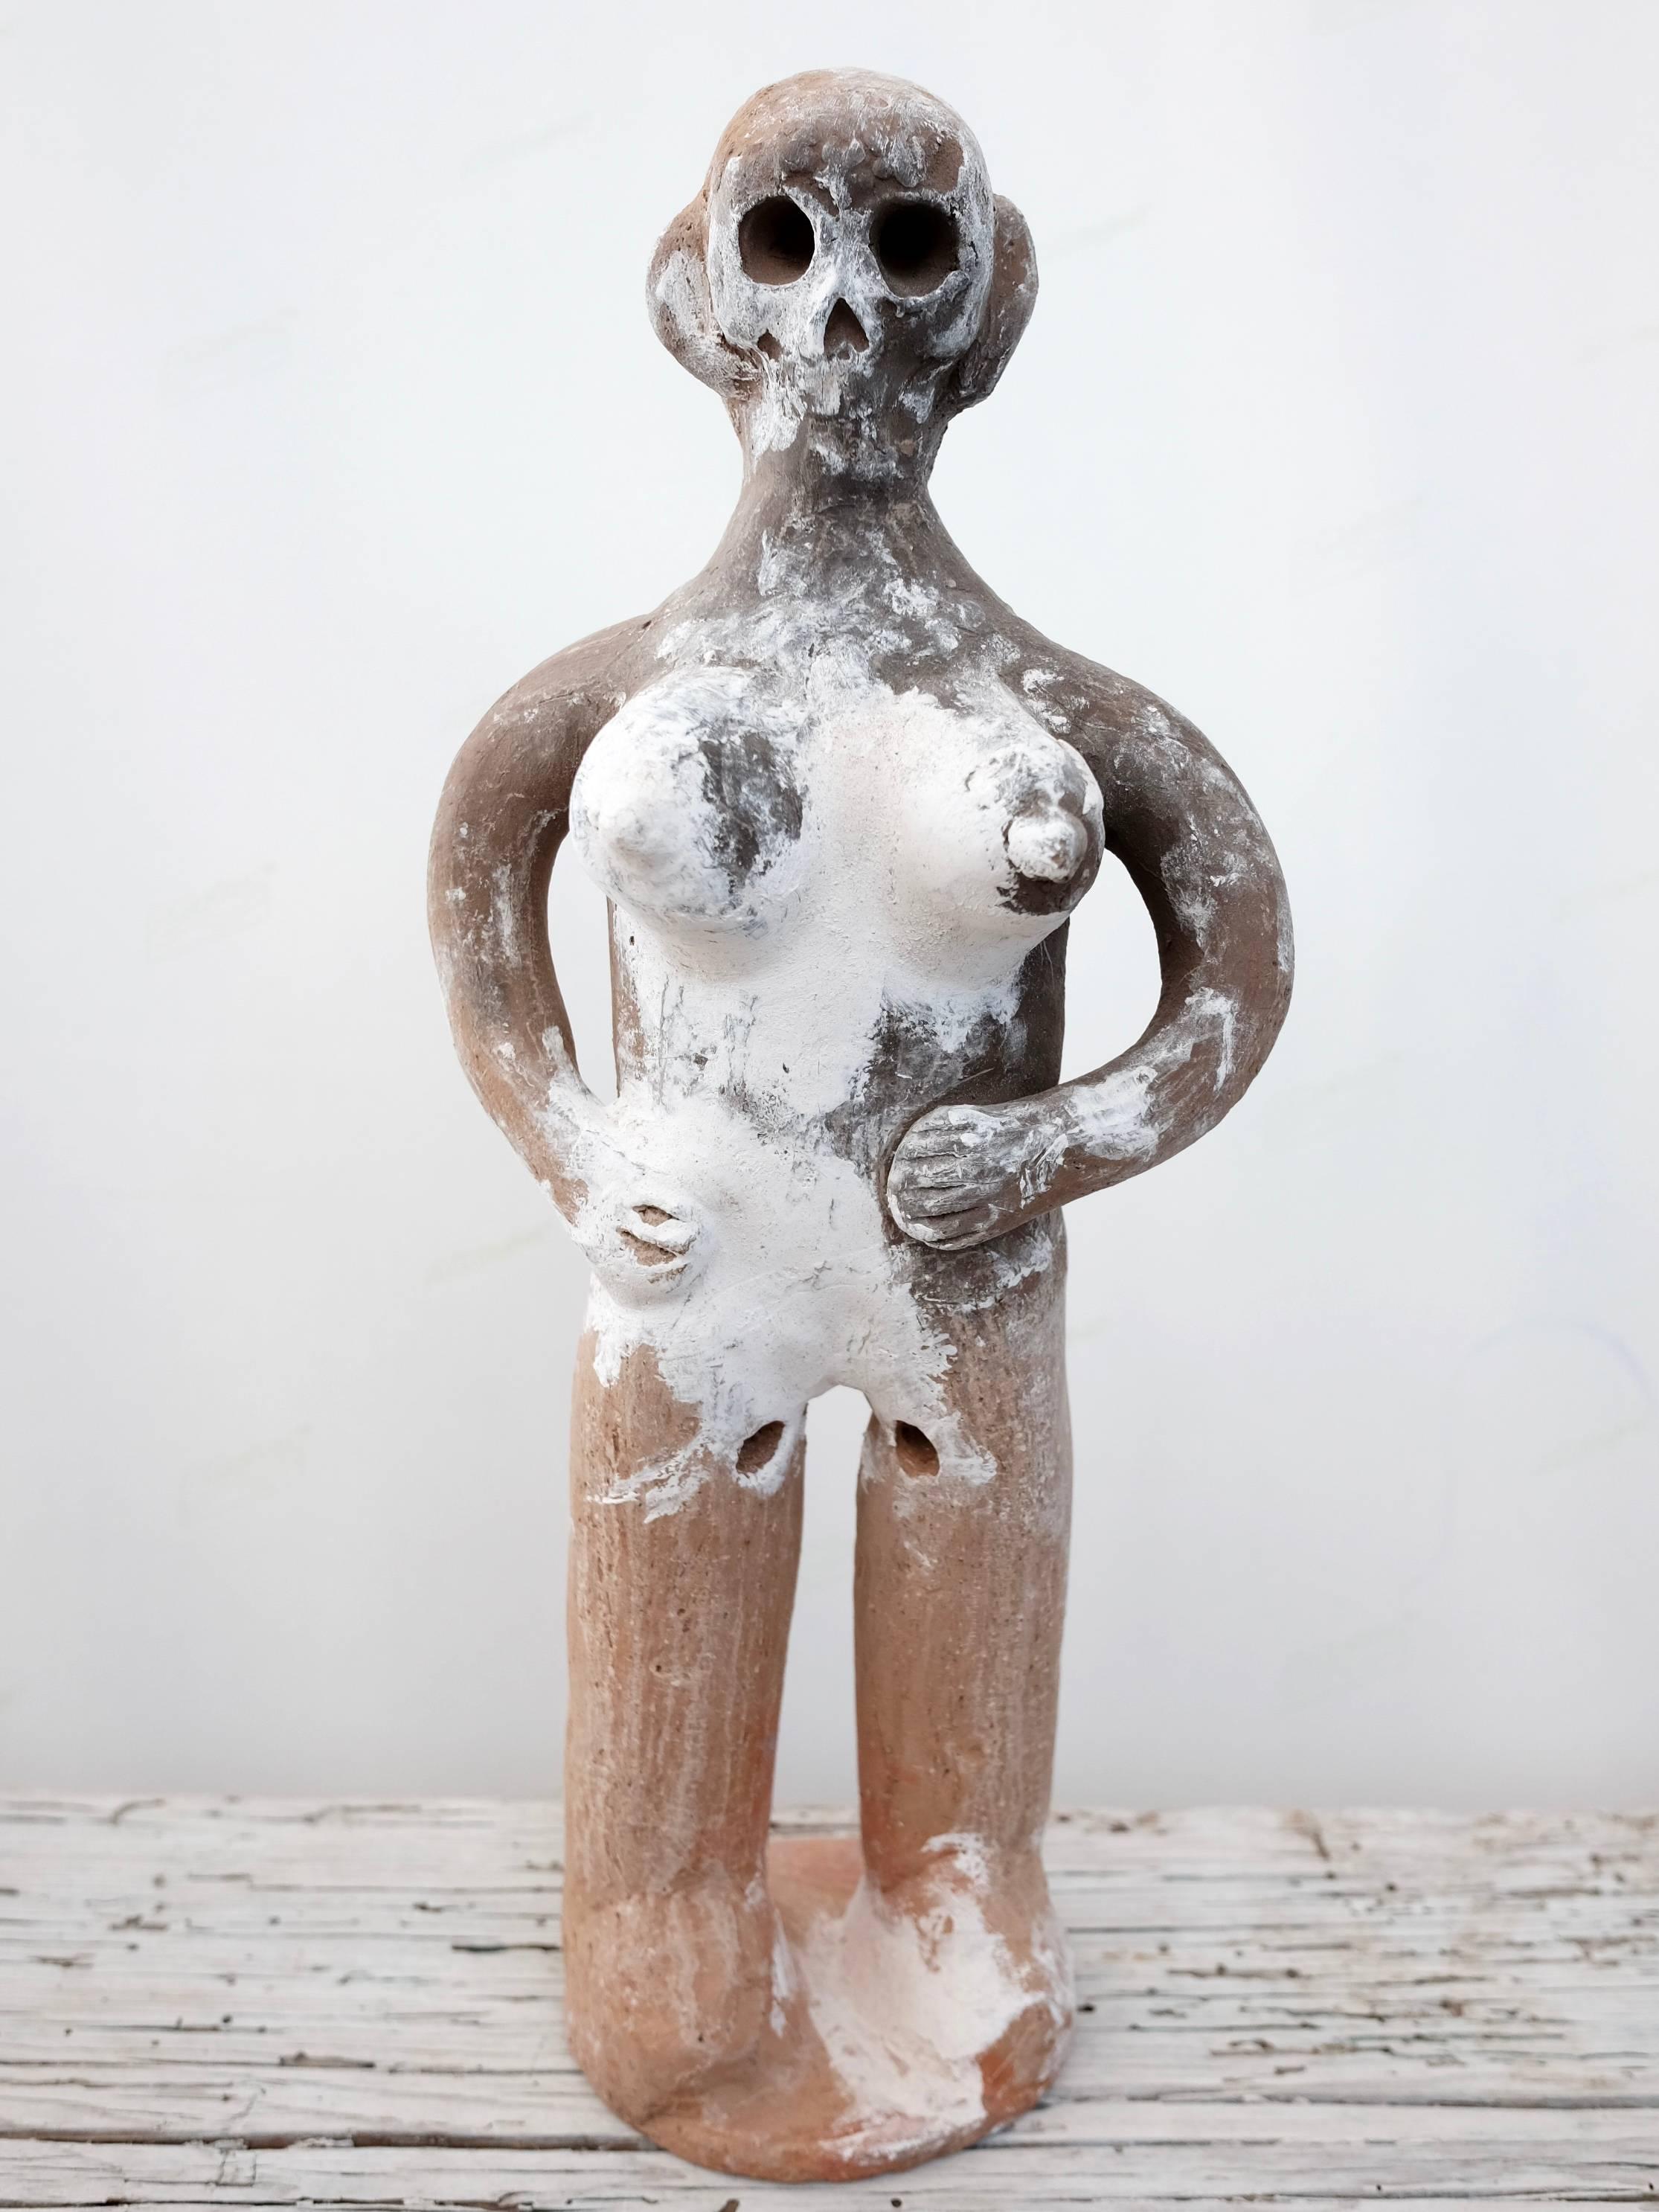 Folk Art Contemporary Clay Sculpture by Serapio Medrano from Jalisco, Mexico